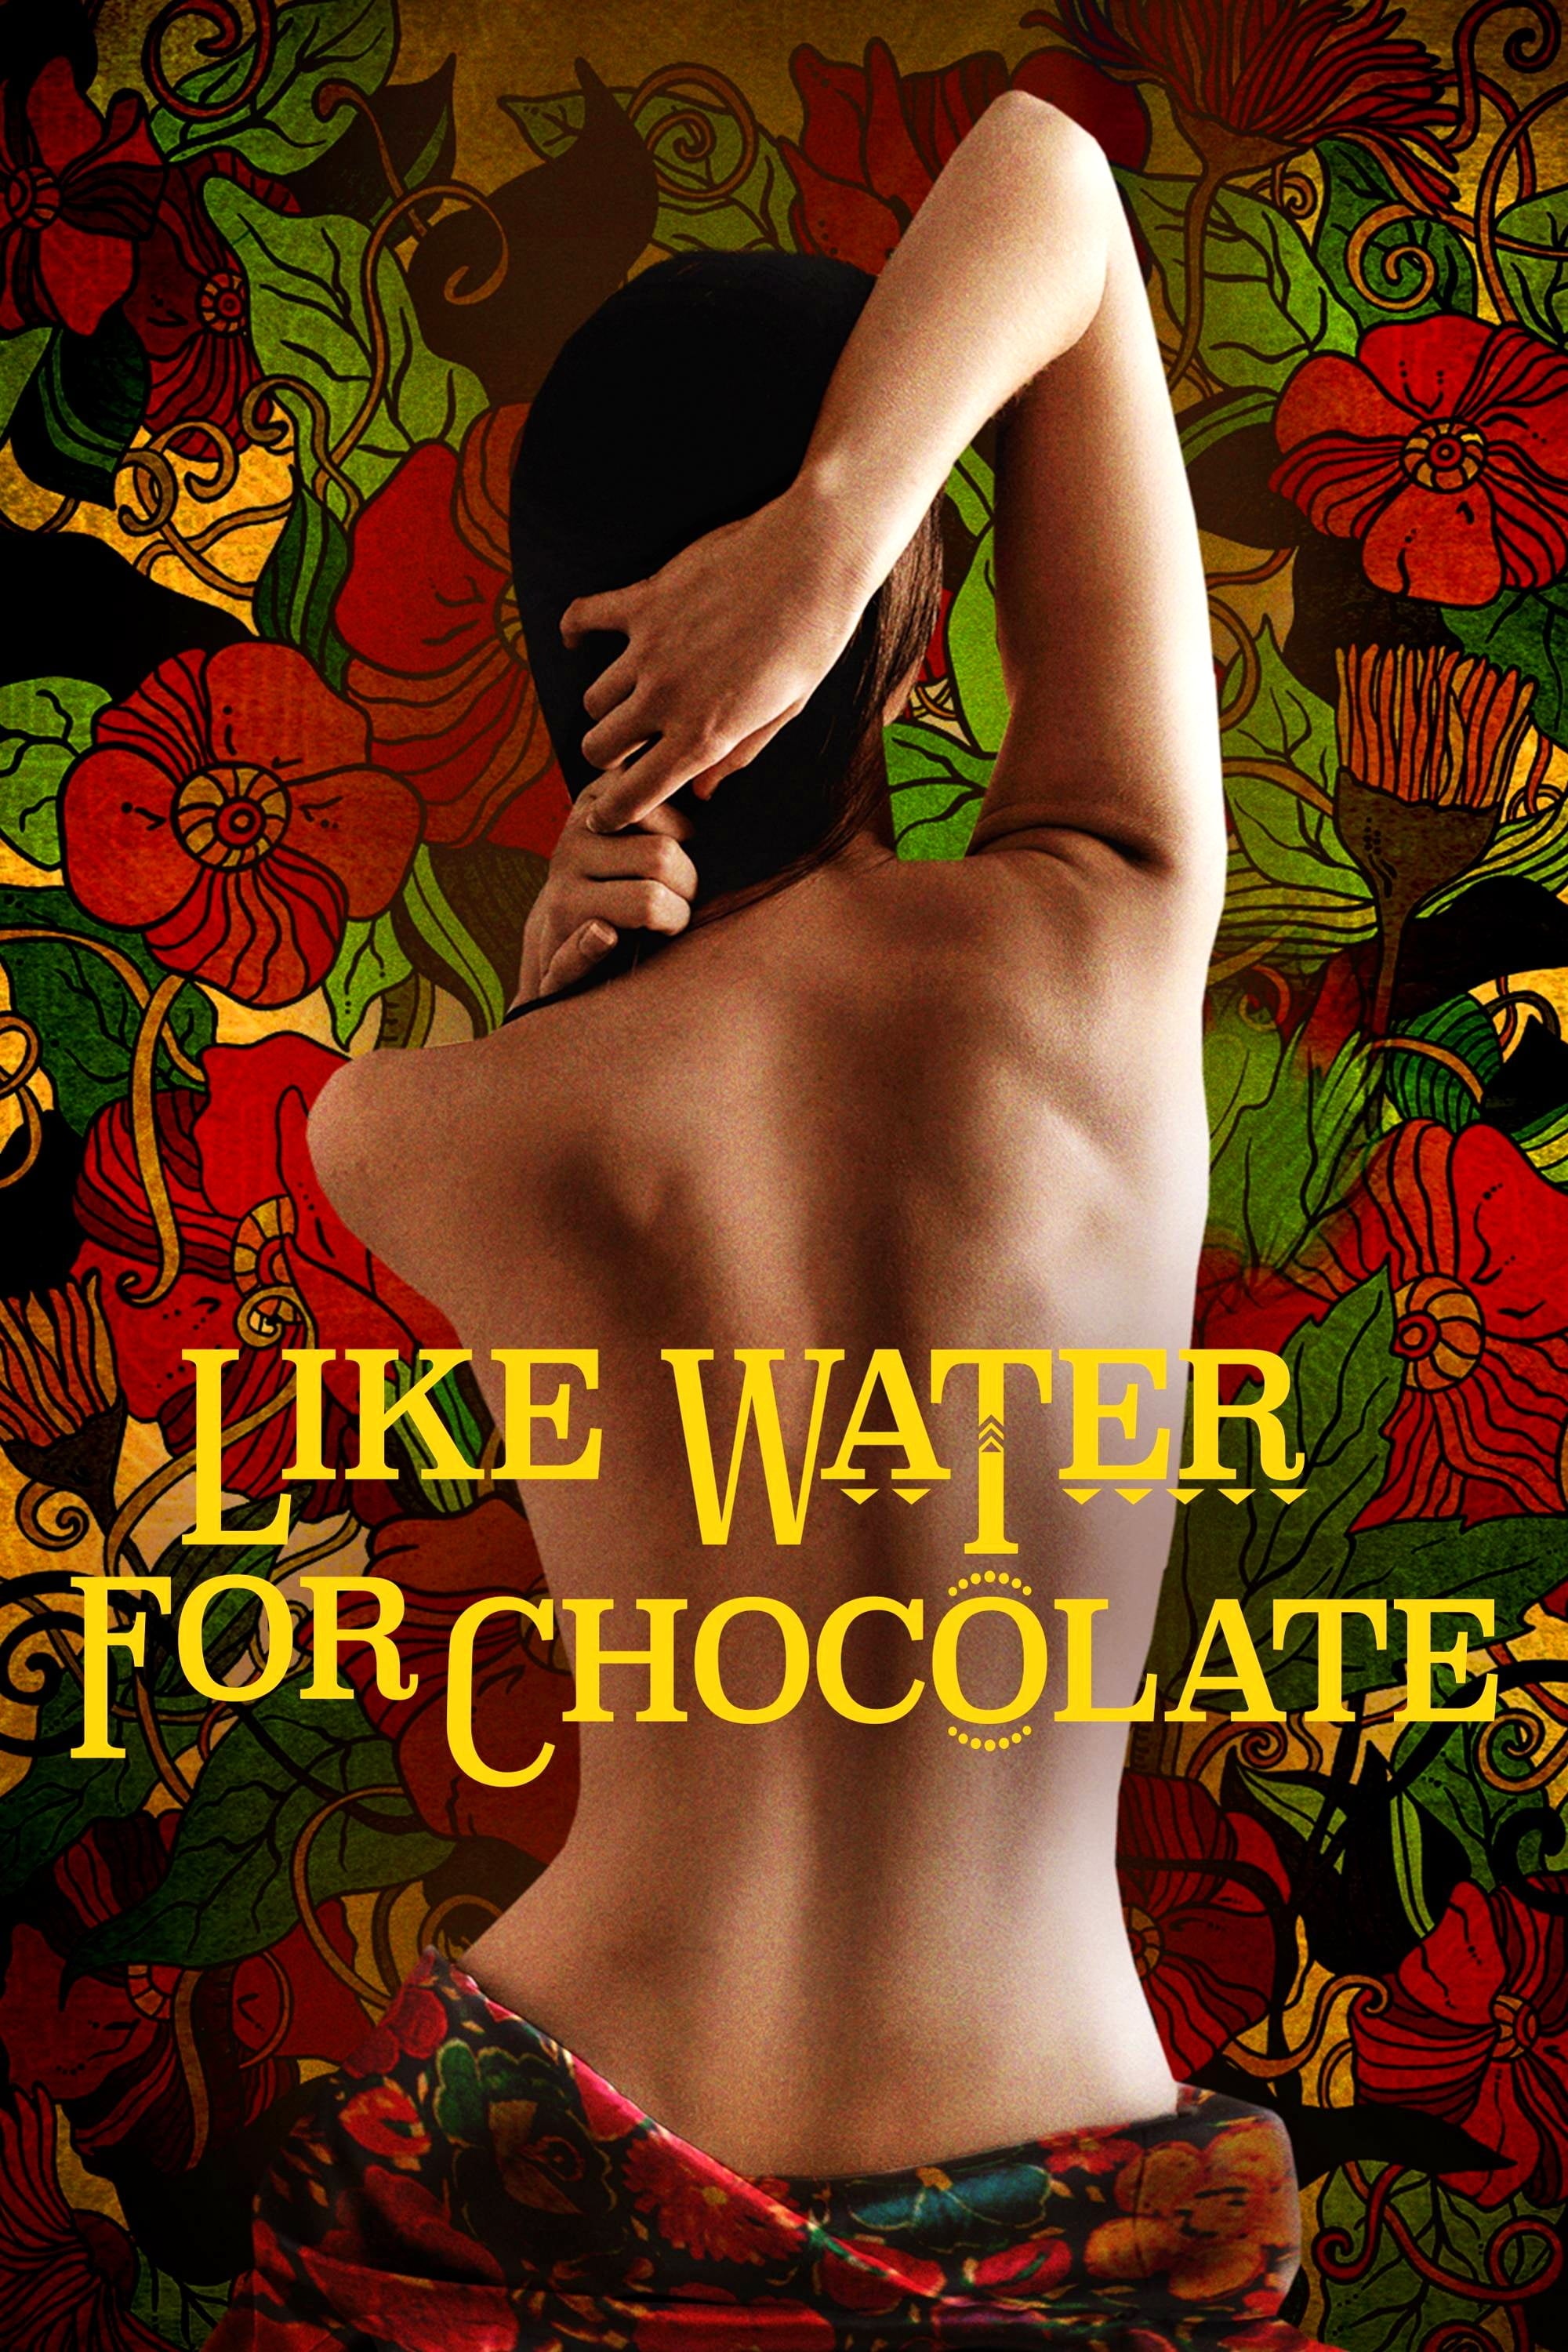 Like Water for Chocolate (1992)